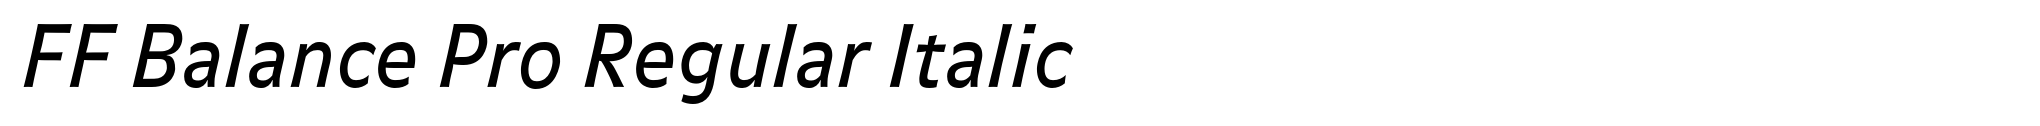 FF Balance Pro Regular Italic image